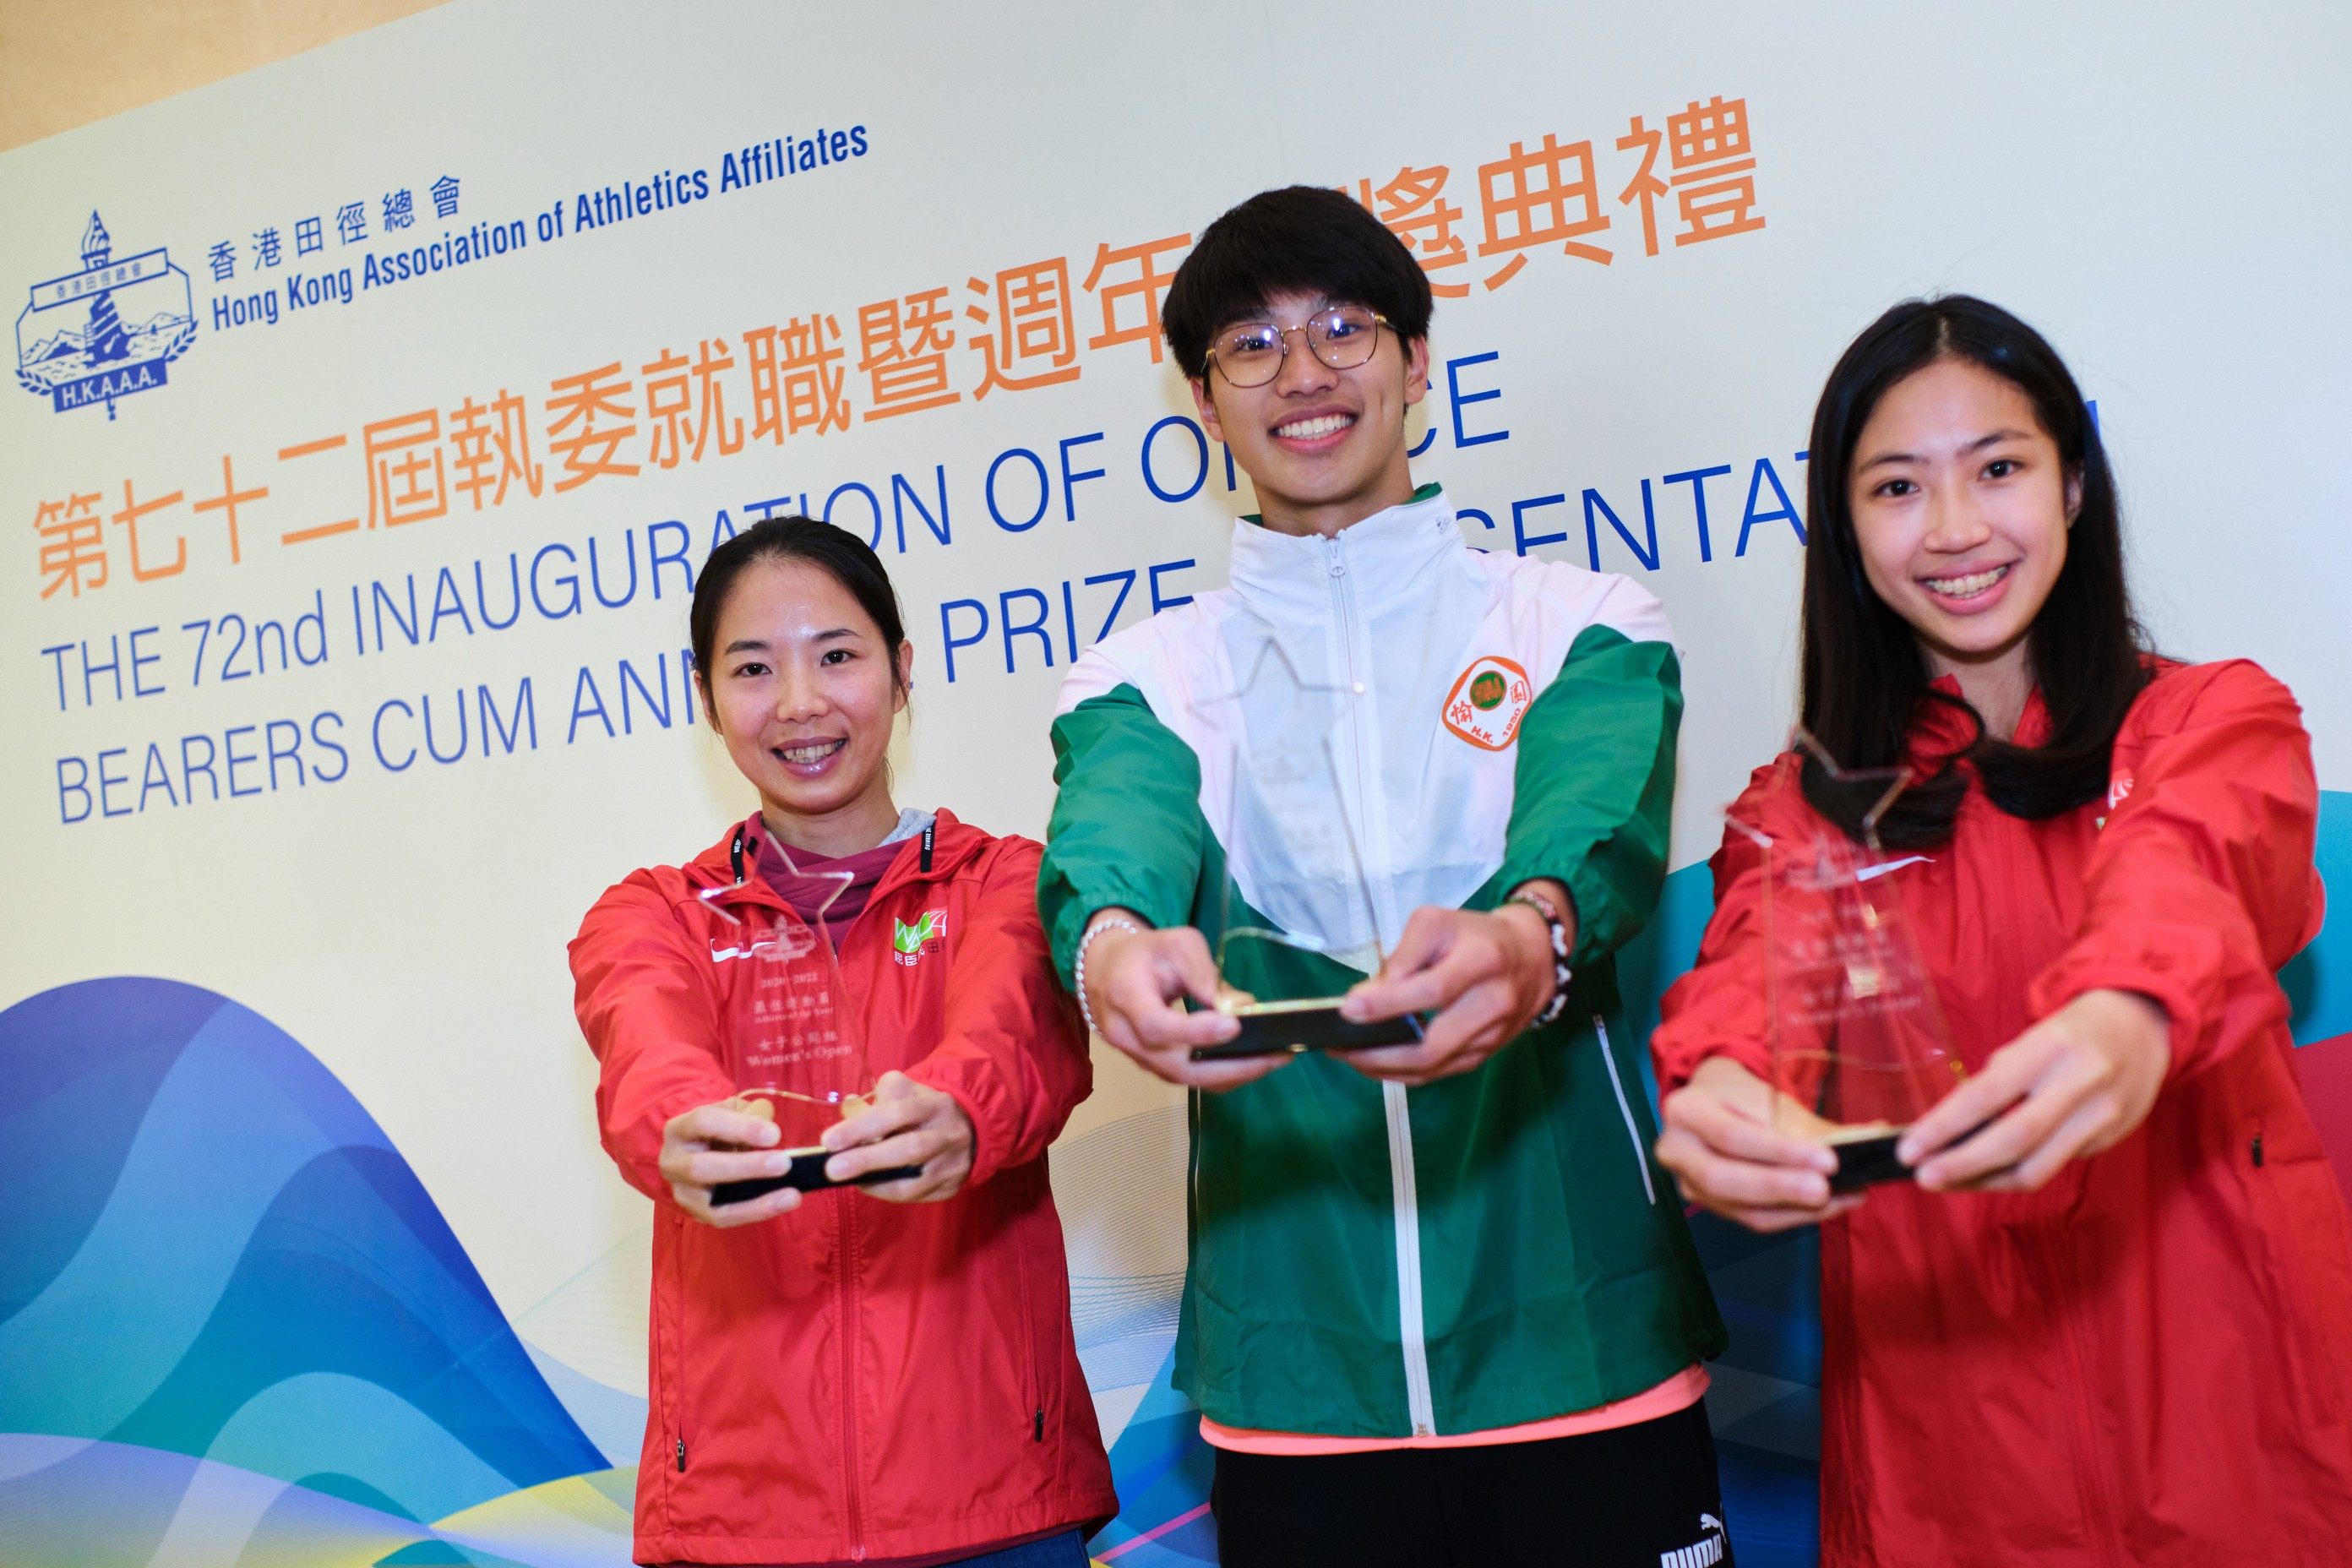 Award winners (from left) Jessica Ching, Cheung Siu-hang and Chloe Pak at the HKAAA prize presentation. Photo: Handout